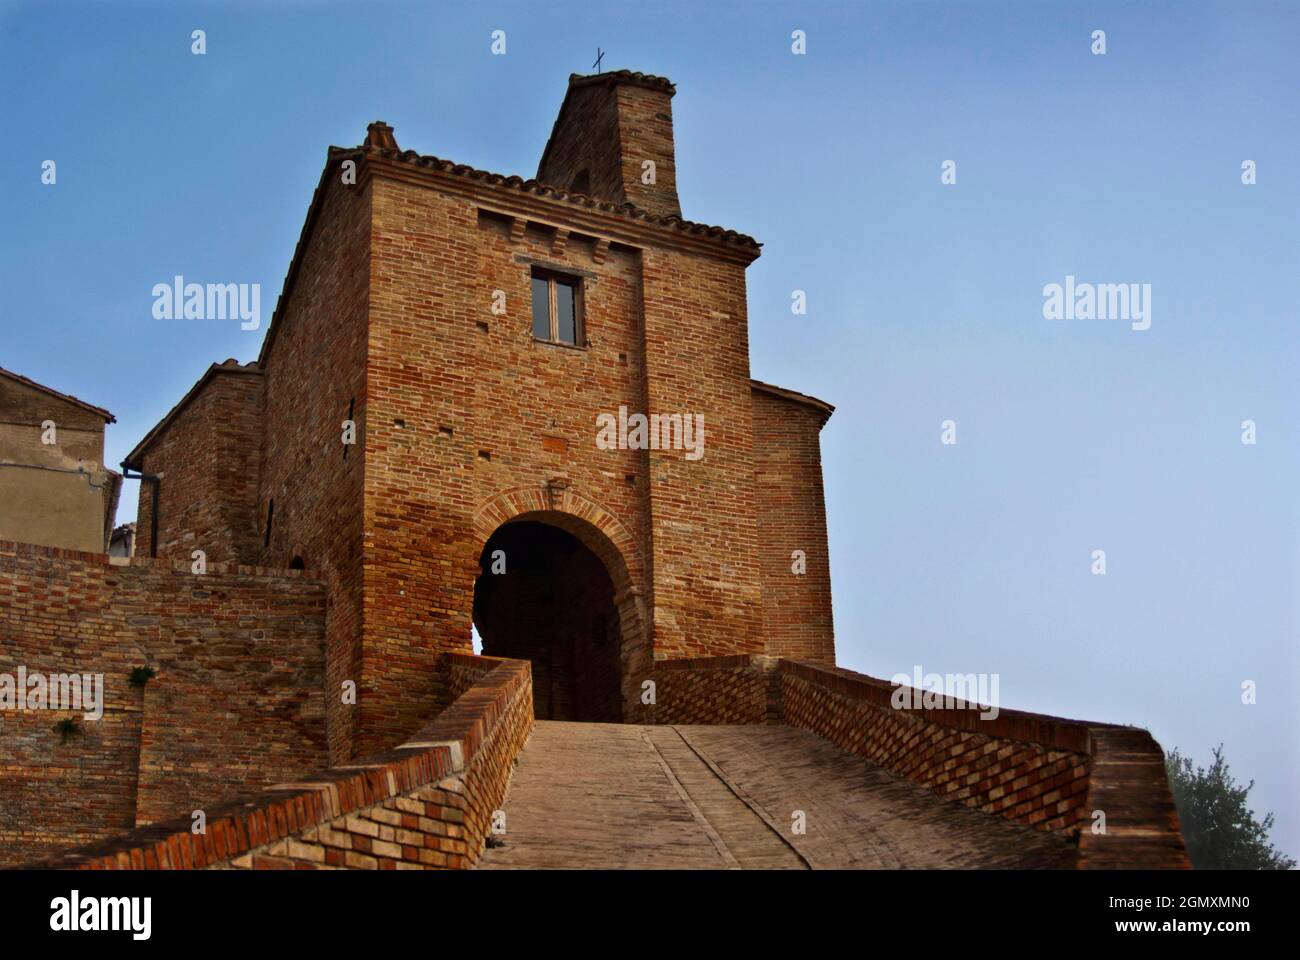 Castle, Loretello, Arcevia, Ancona, Marche, Italy, Europe Stock Photo